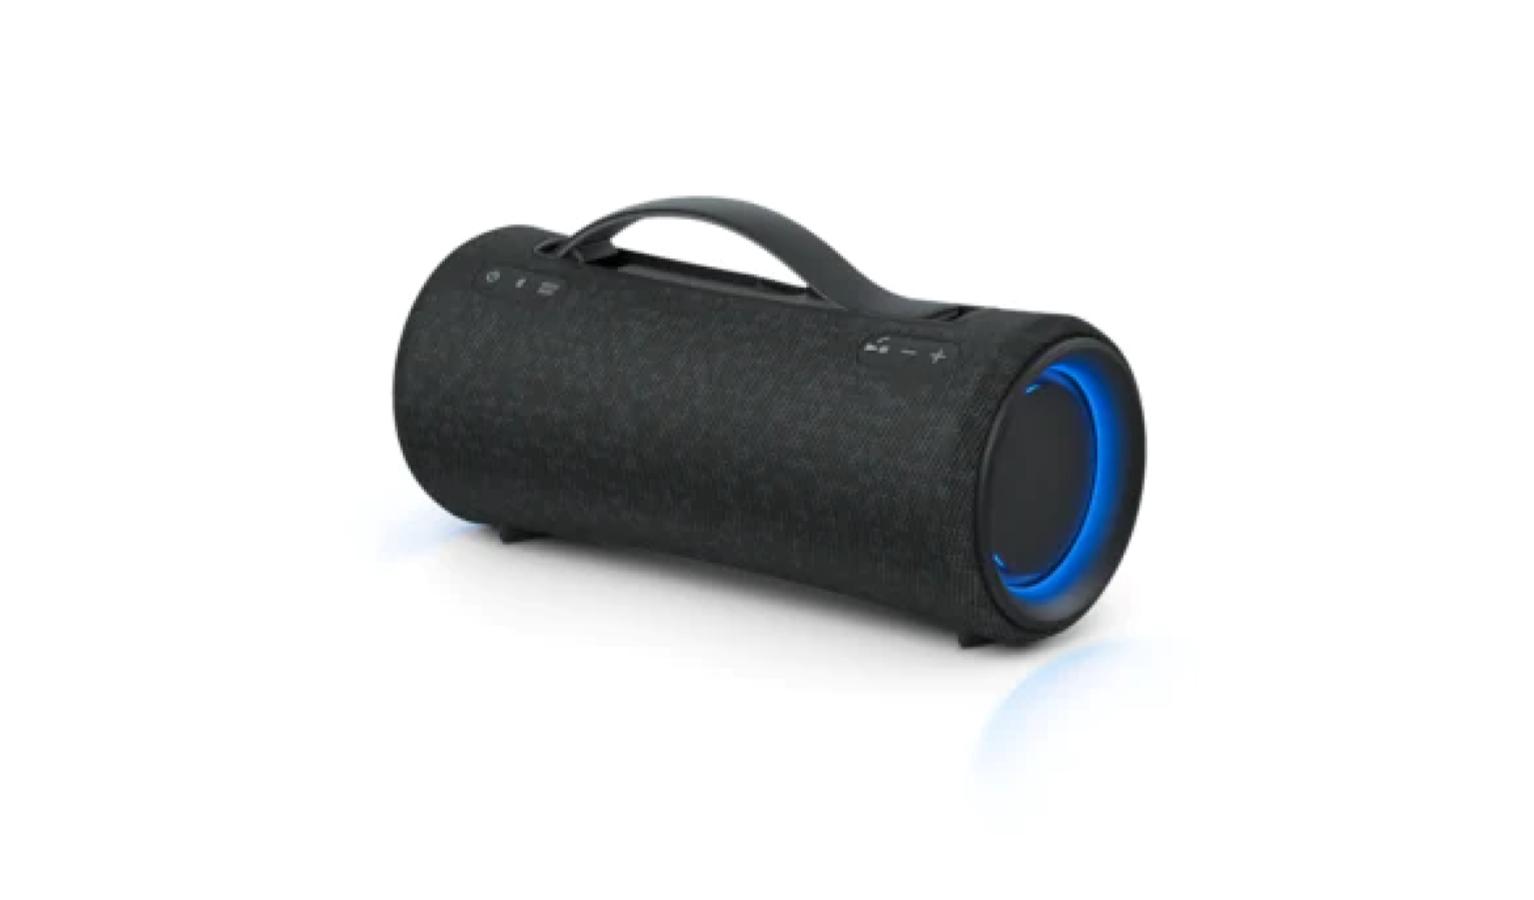 Sony XG300 X-Series Portable Wireless Speaker - Black (SRS-XG300/B